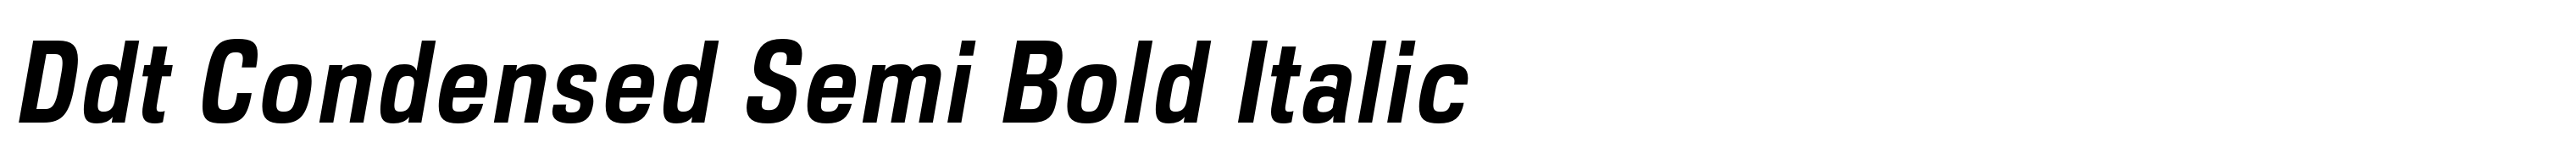 Ddt Condensed Semi Bold Italic